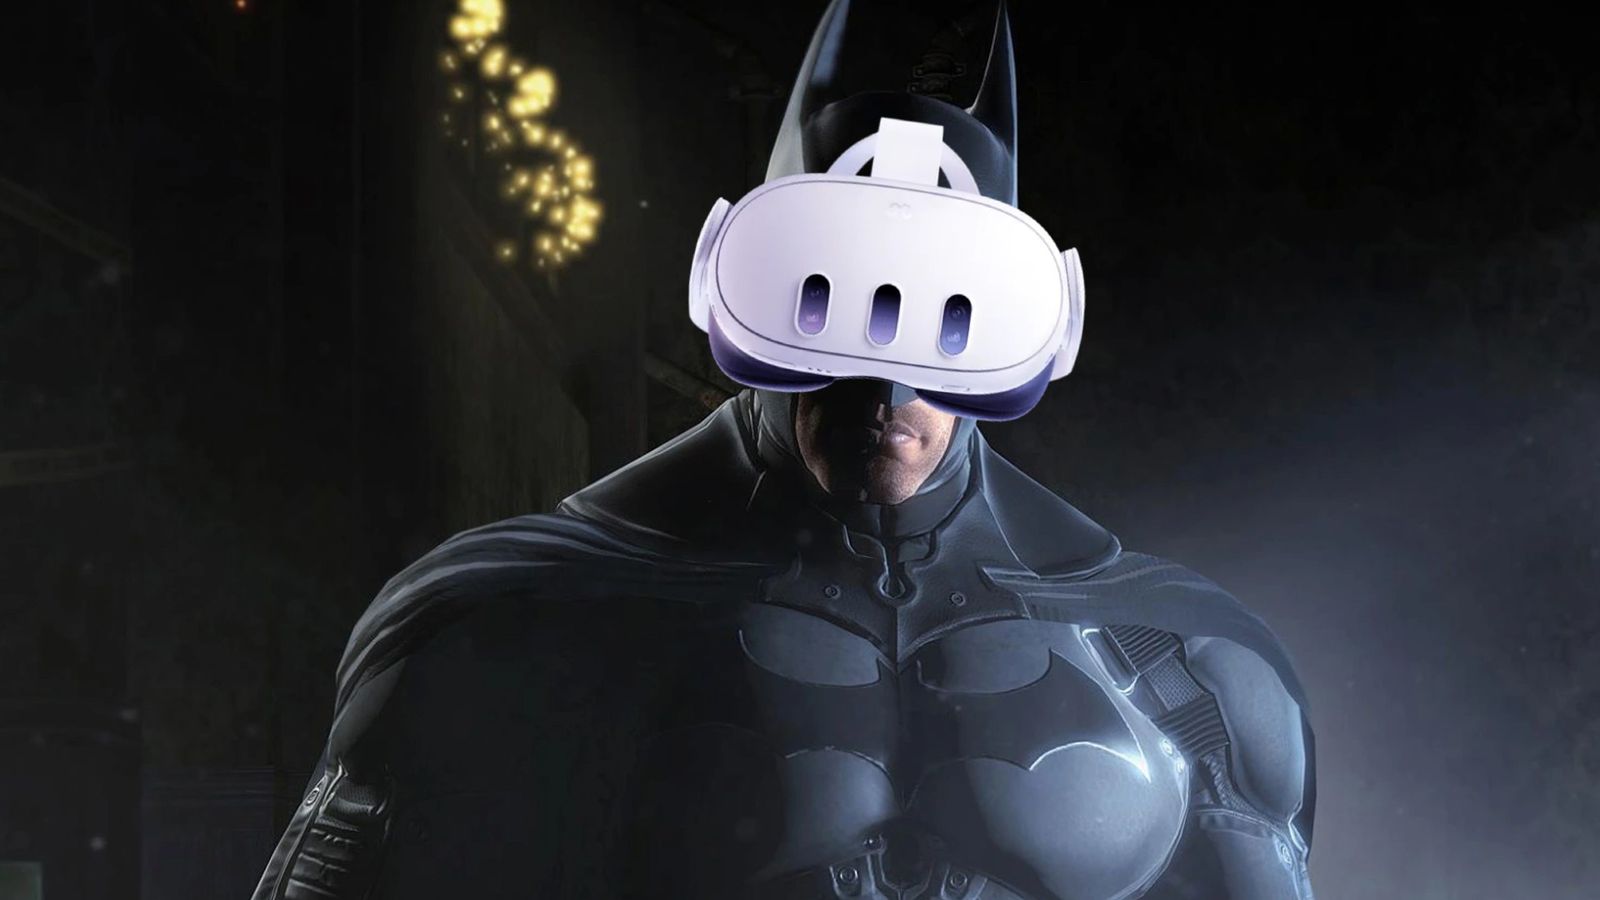 Batman Arkham Origins batman with a Meta Quest 3 headset on